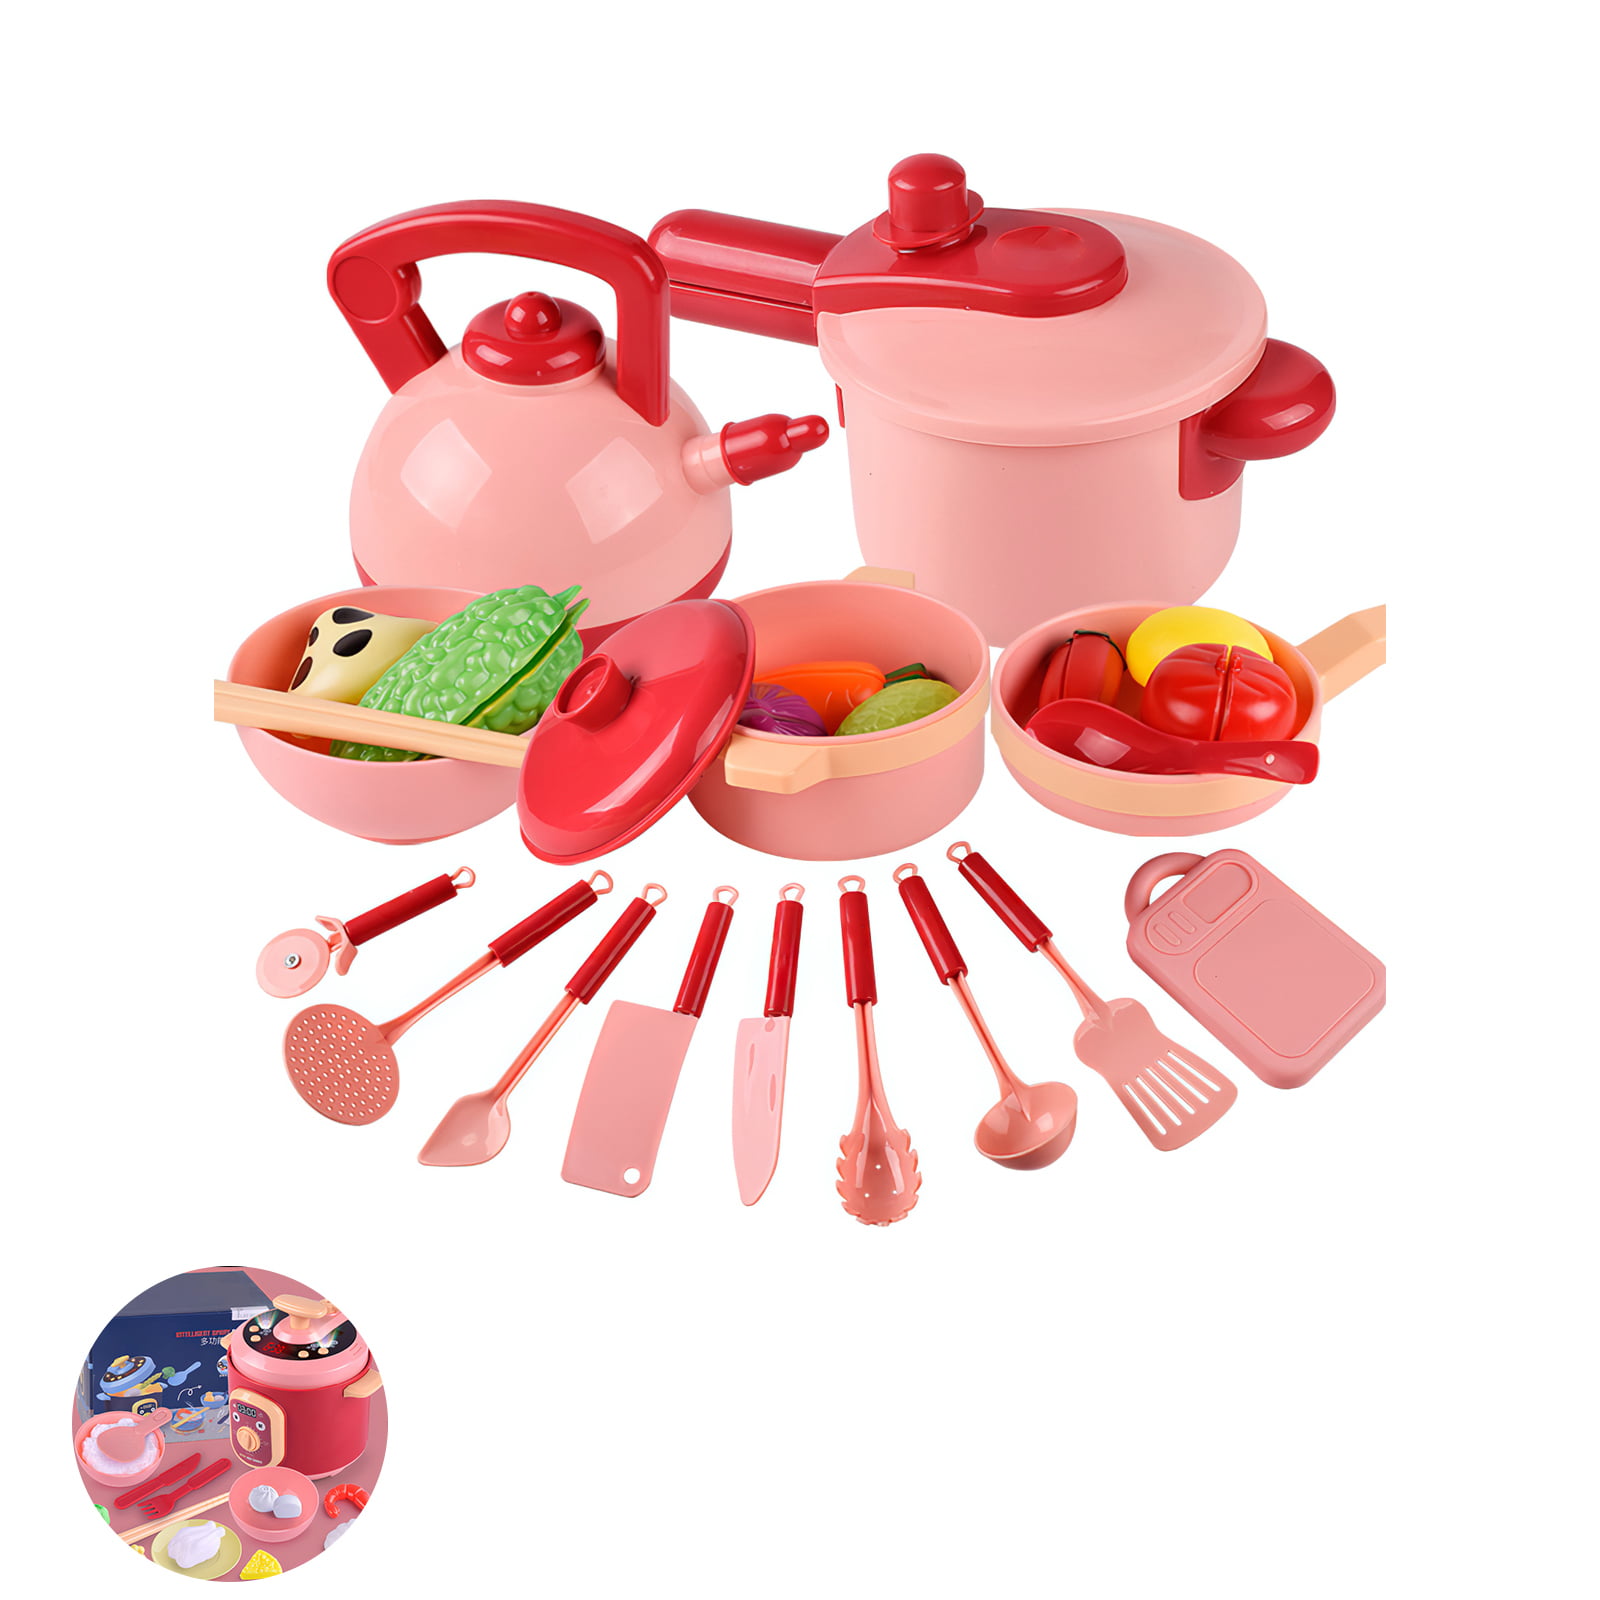 Kidkraft Deluxe Cookware Set 11pcs Toy Kitchen Sets for sale online 